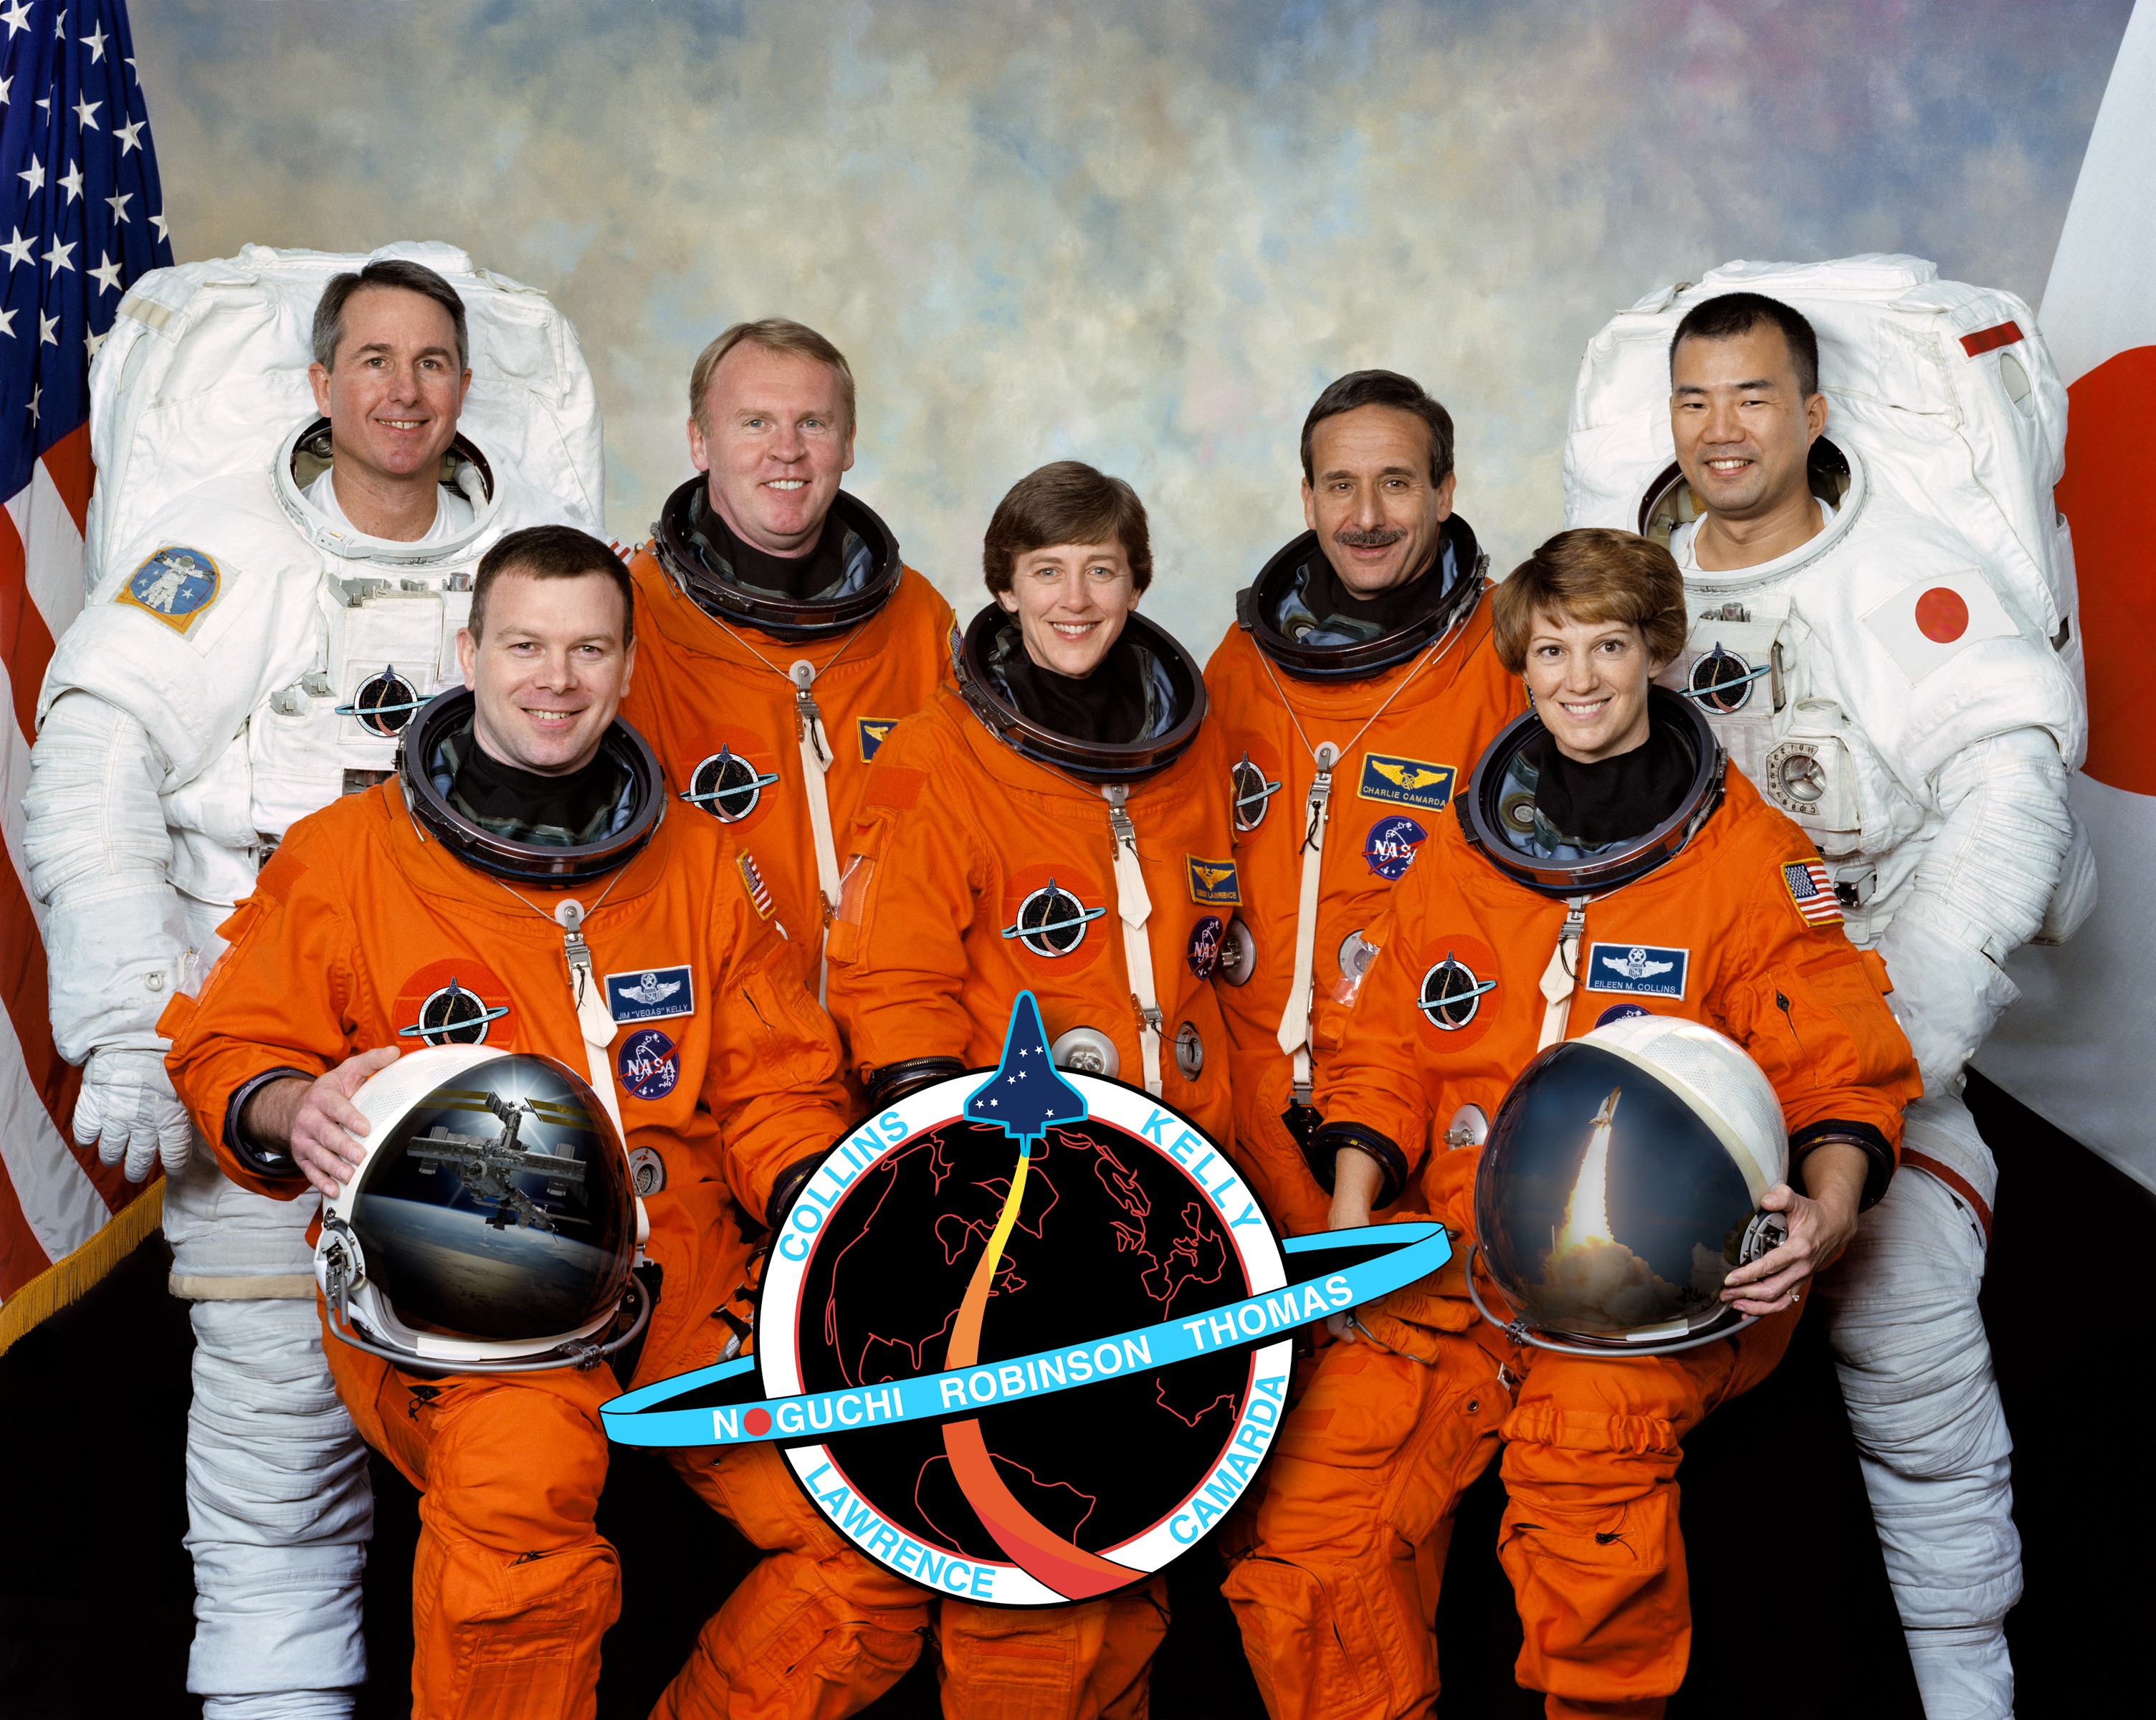 Space shuttle astronauts photo